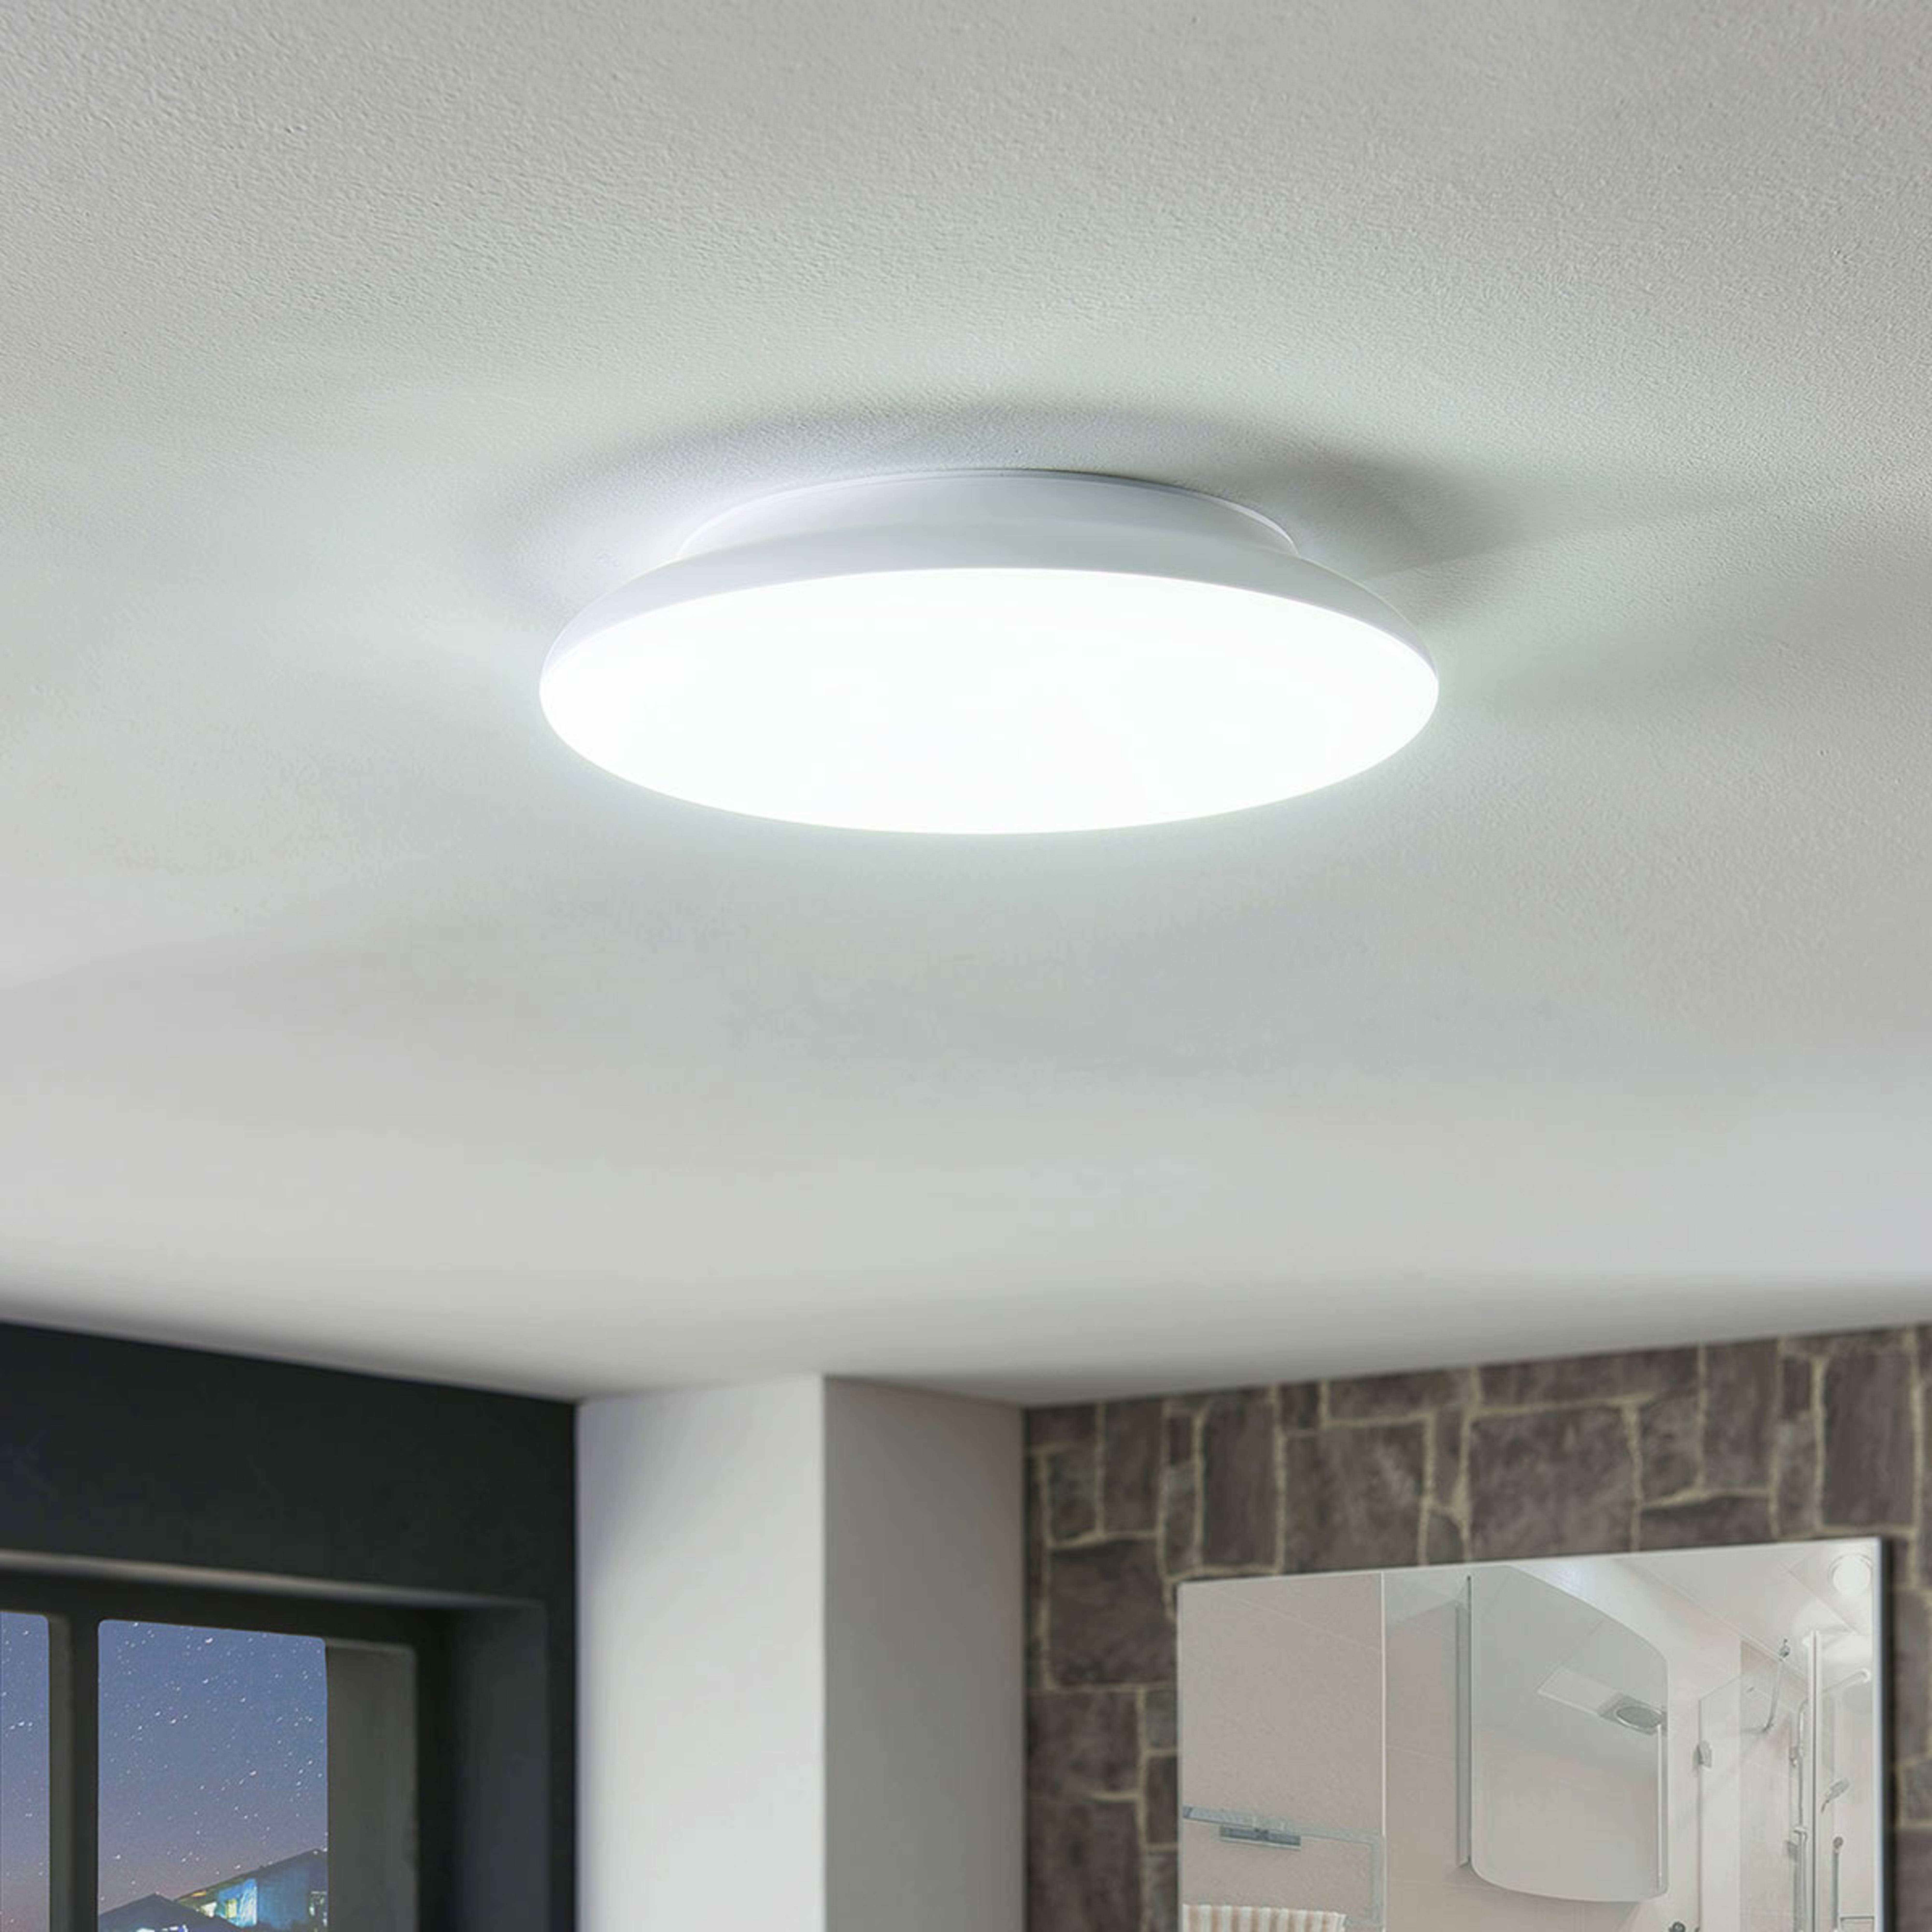 LED plafondlamp Azra, wit, rond, IP54, Ø 25 cm